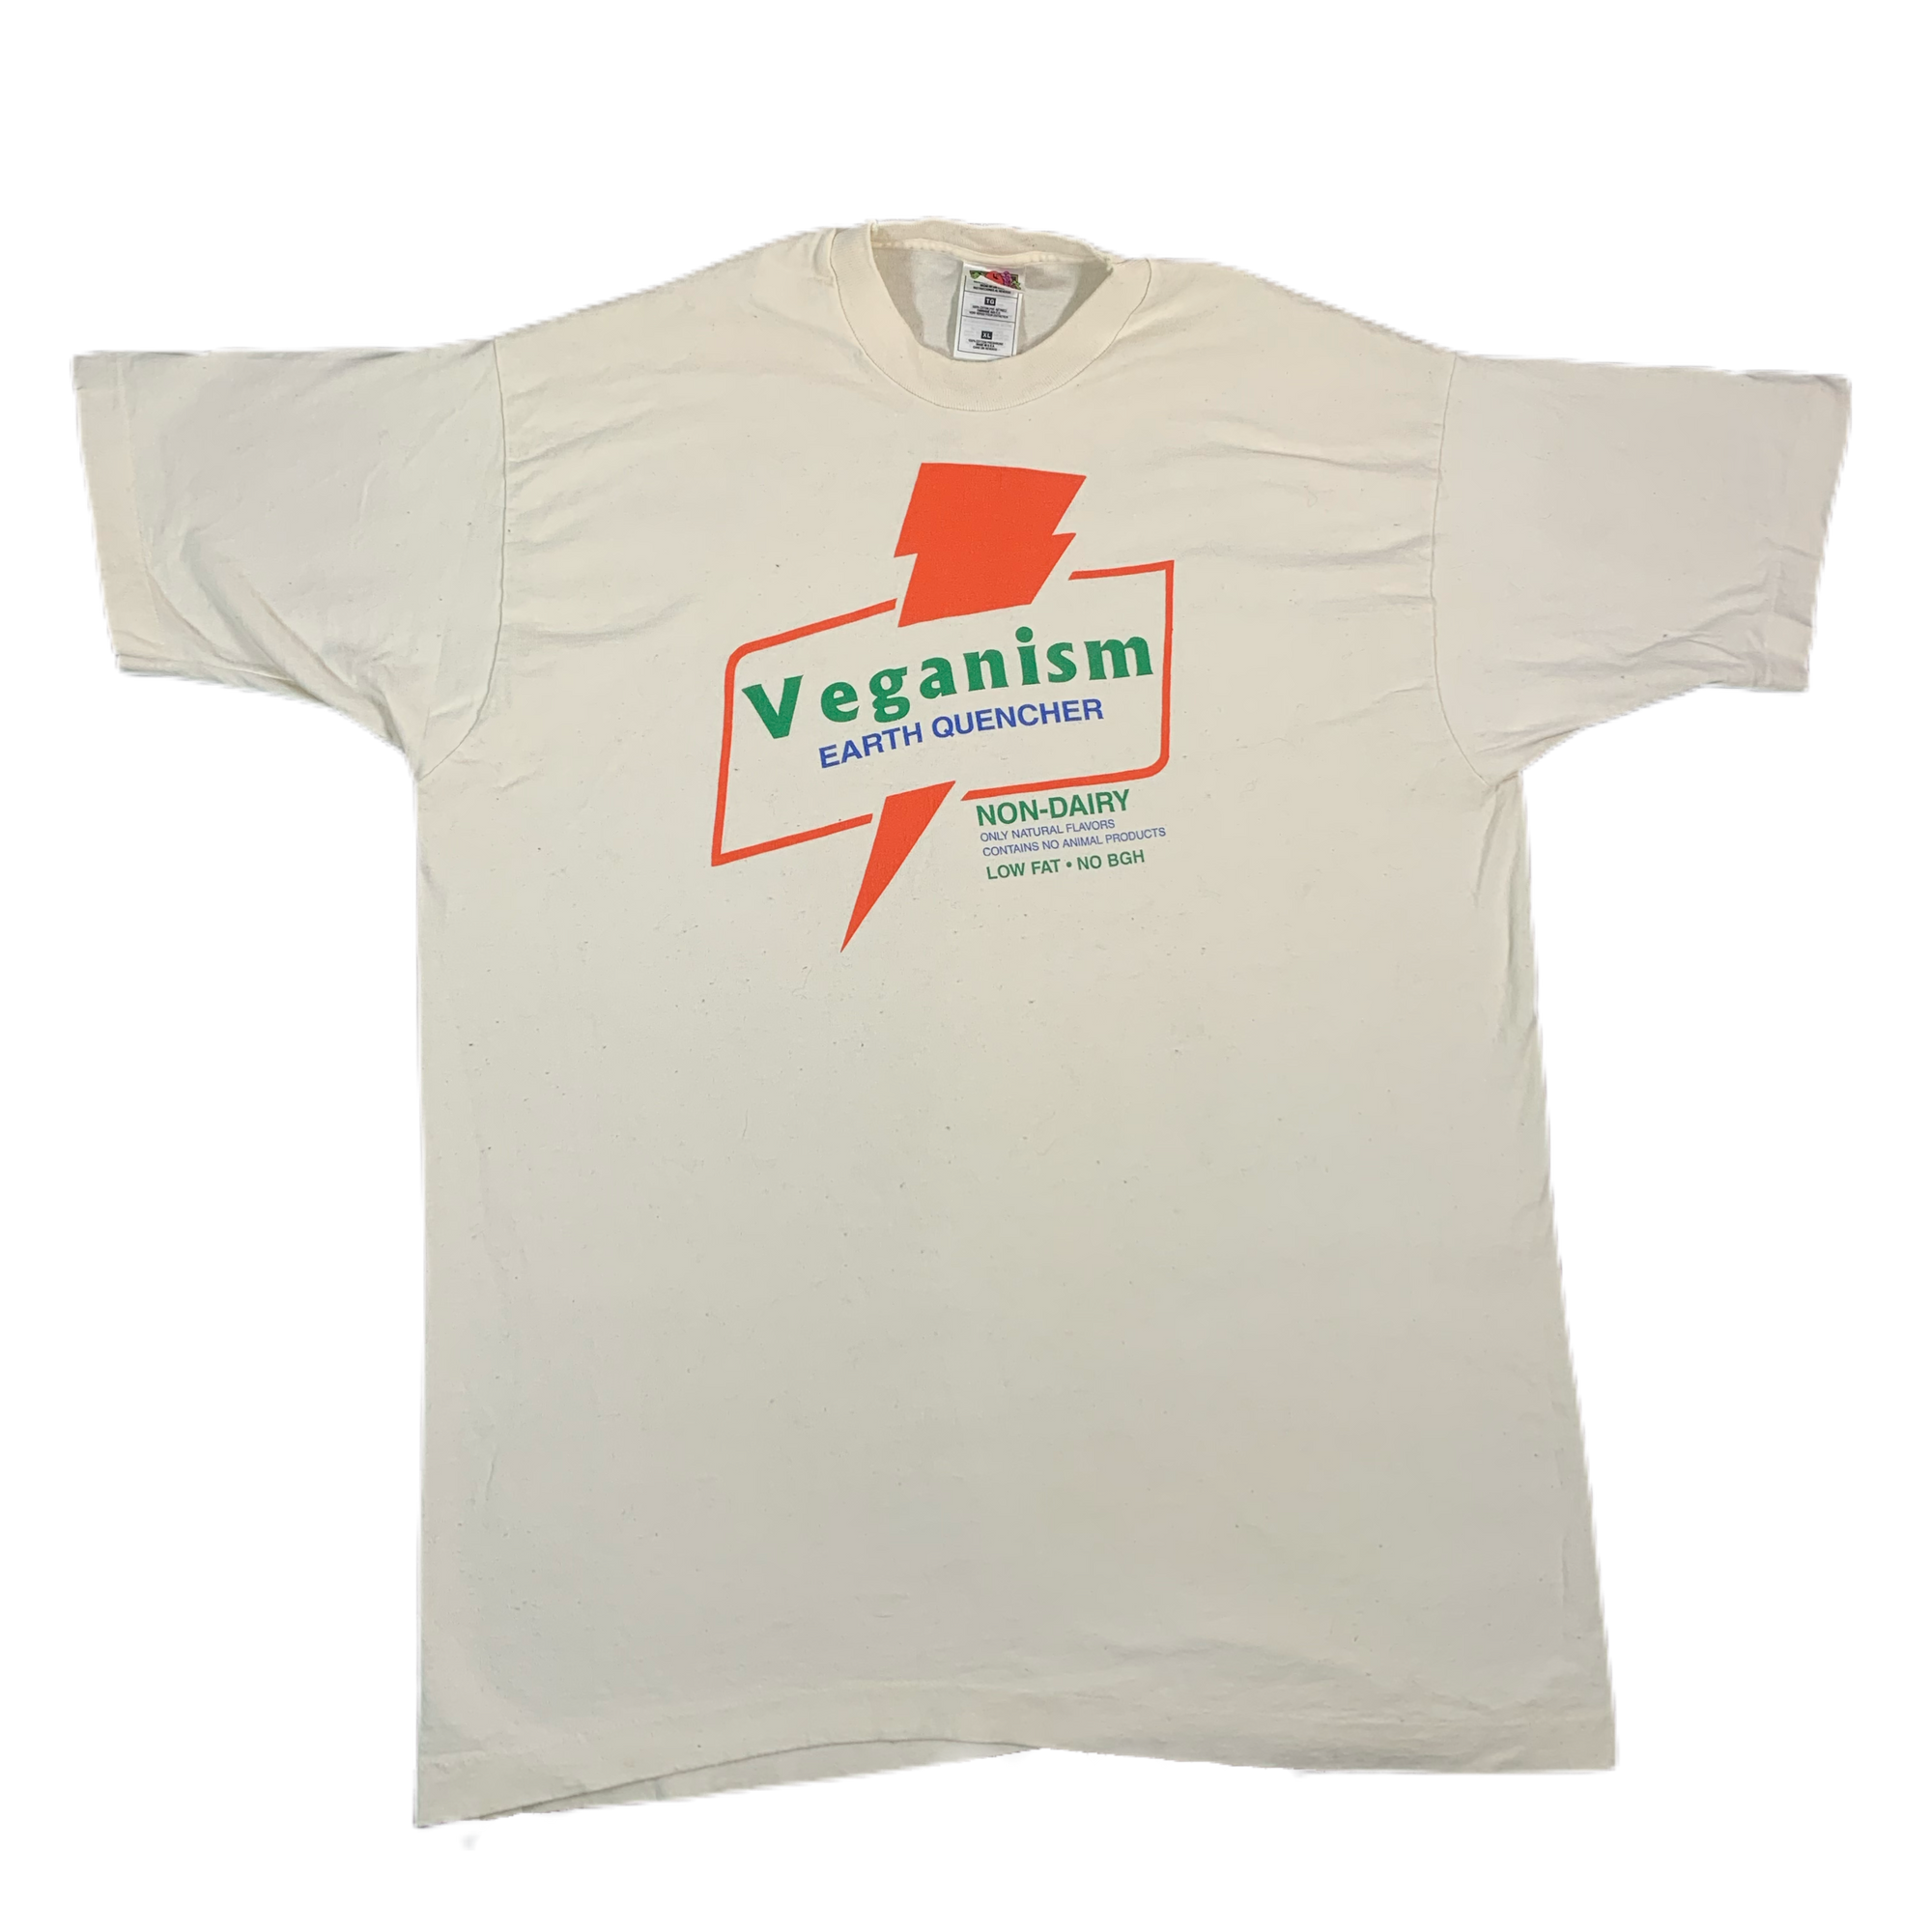 Vintage Veganism “Earth Quencher” T-Shirt - jointcustodydc